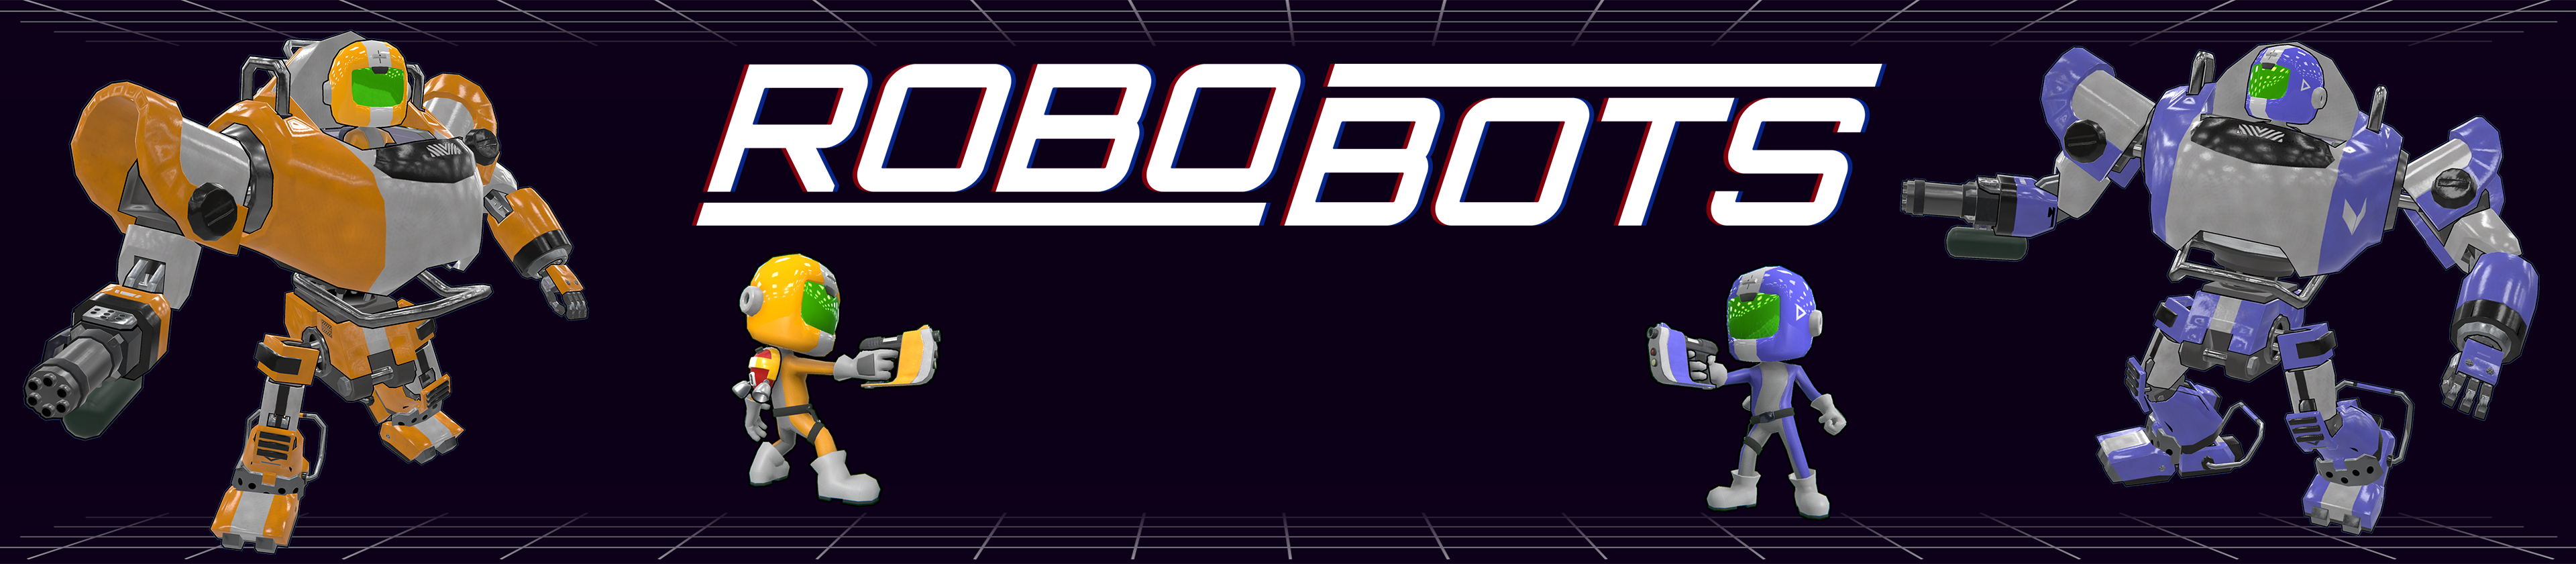 Robobots Prototype